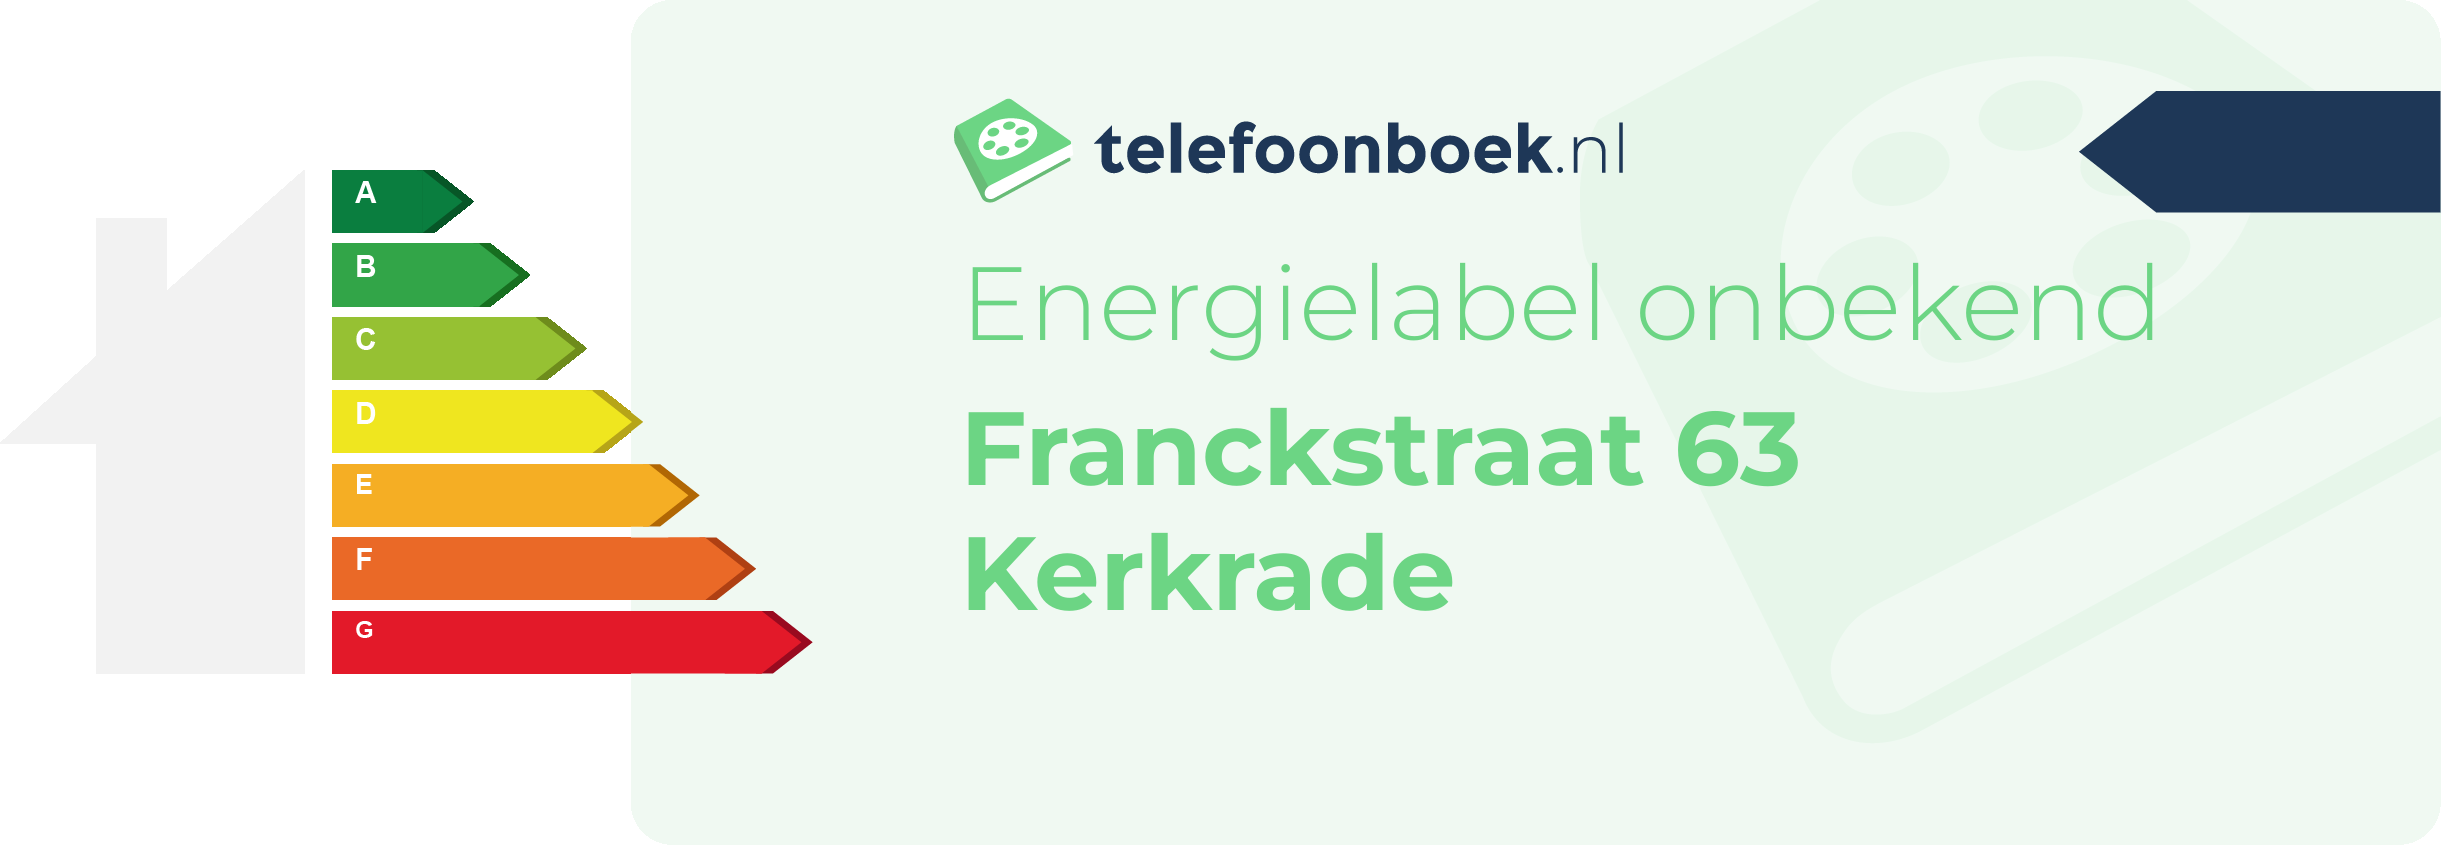 Energielabel Franckstraat 63 Kerkrade